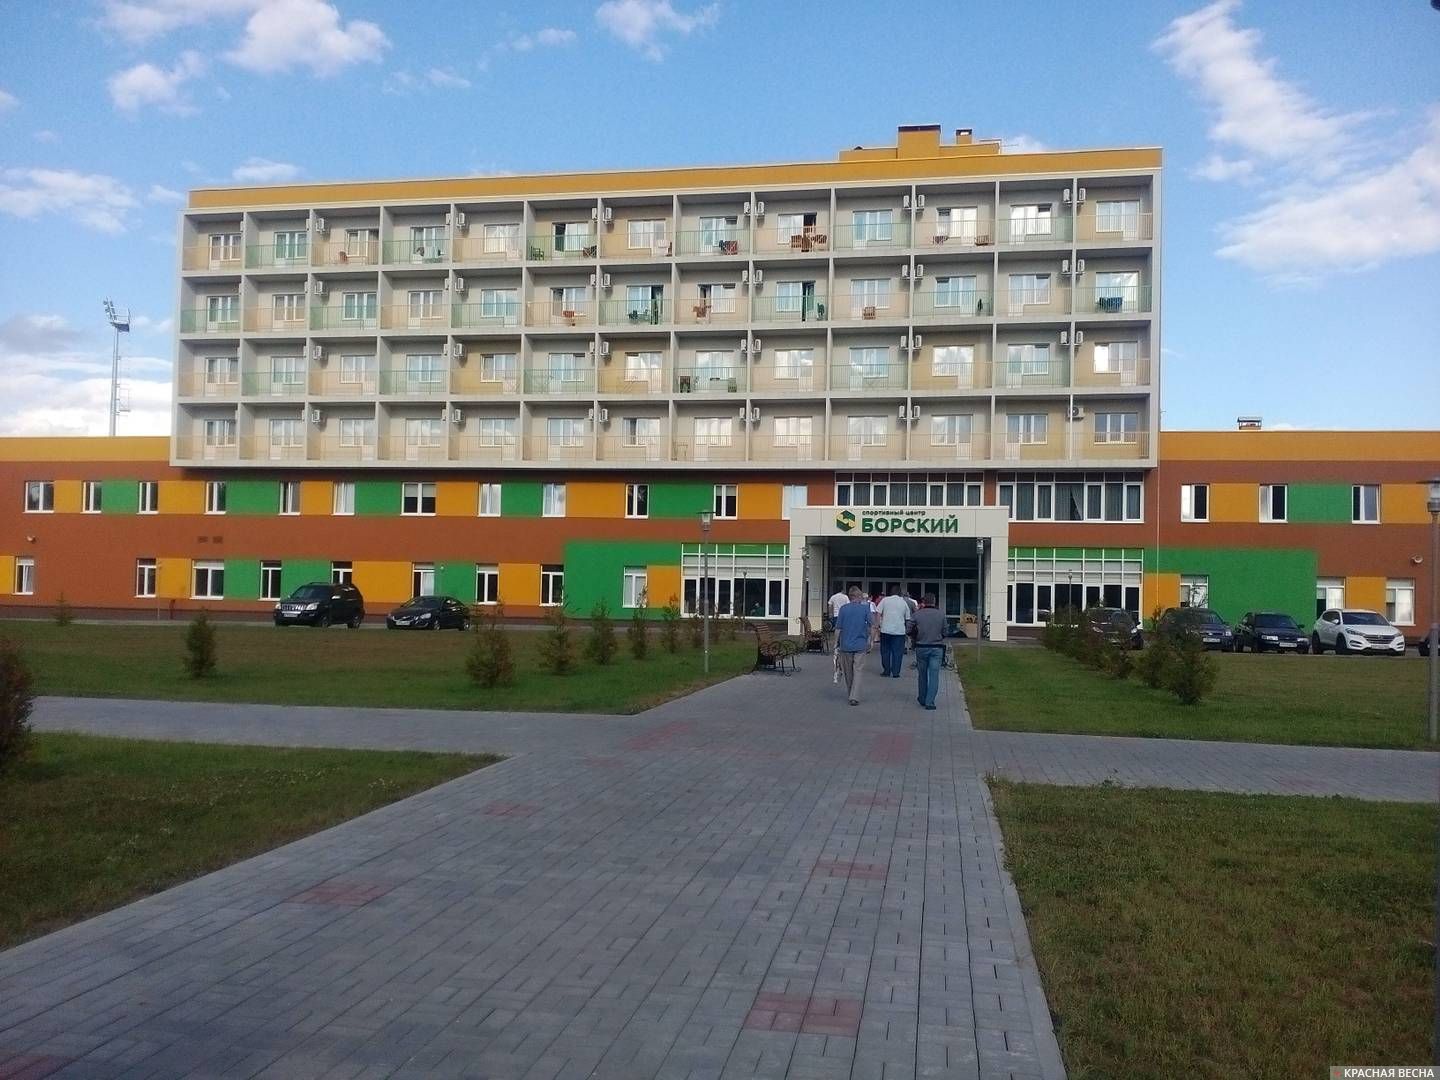 Спортивный центр Борский